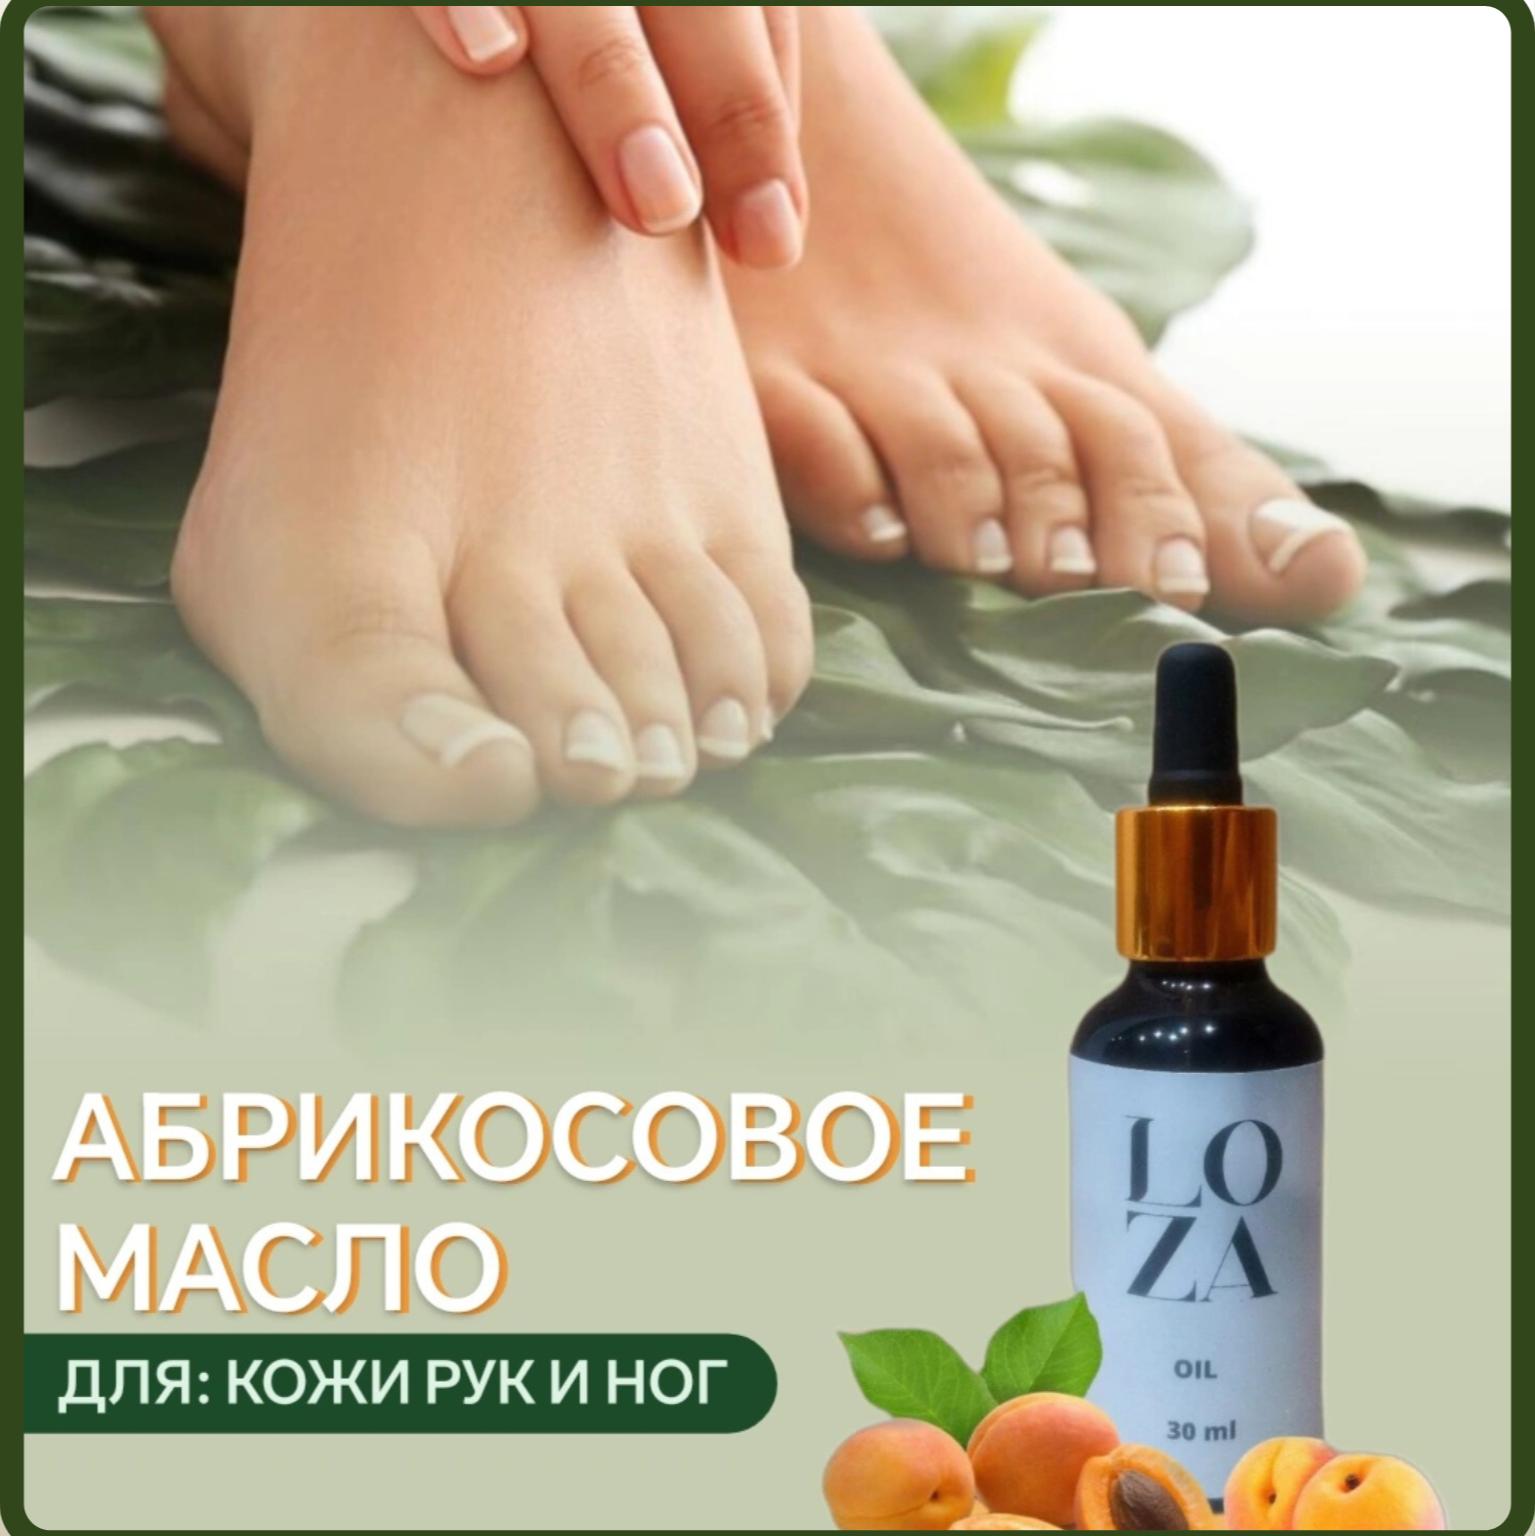 LOZA Smart Oil - Молекулярное масло абрикоса для ухода за ногами